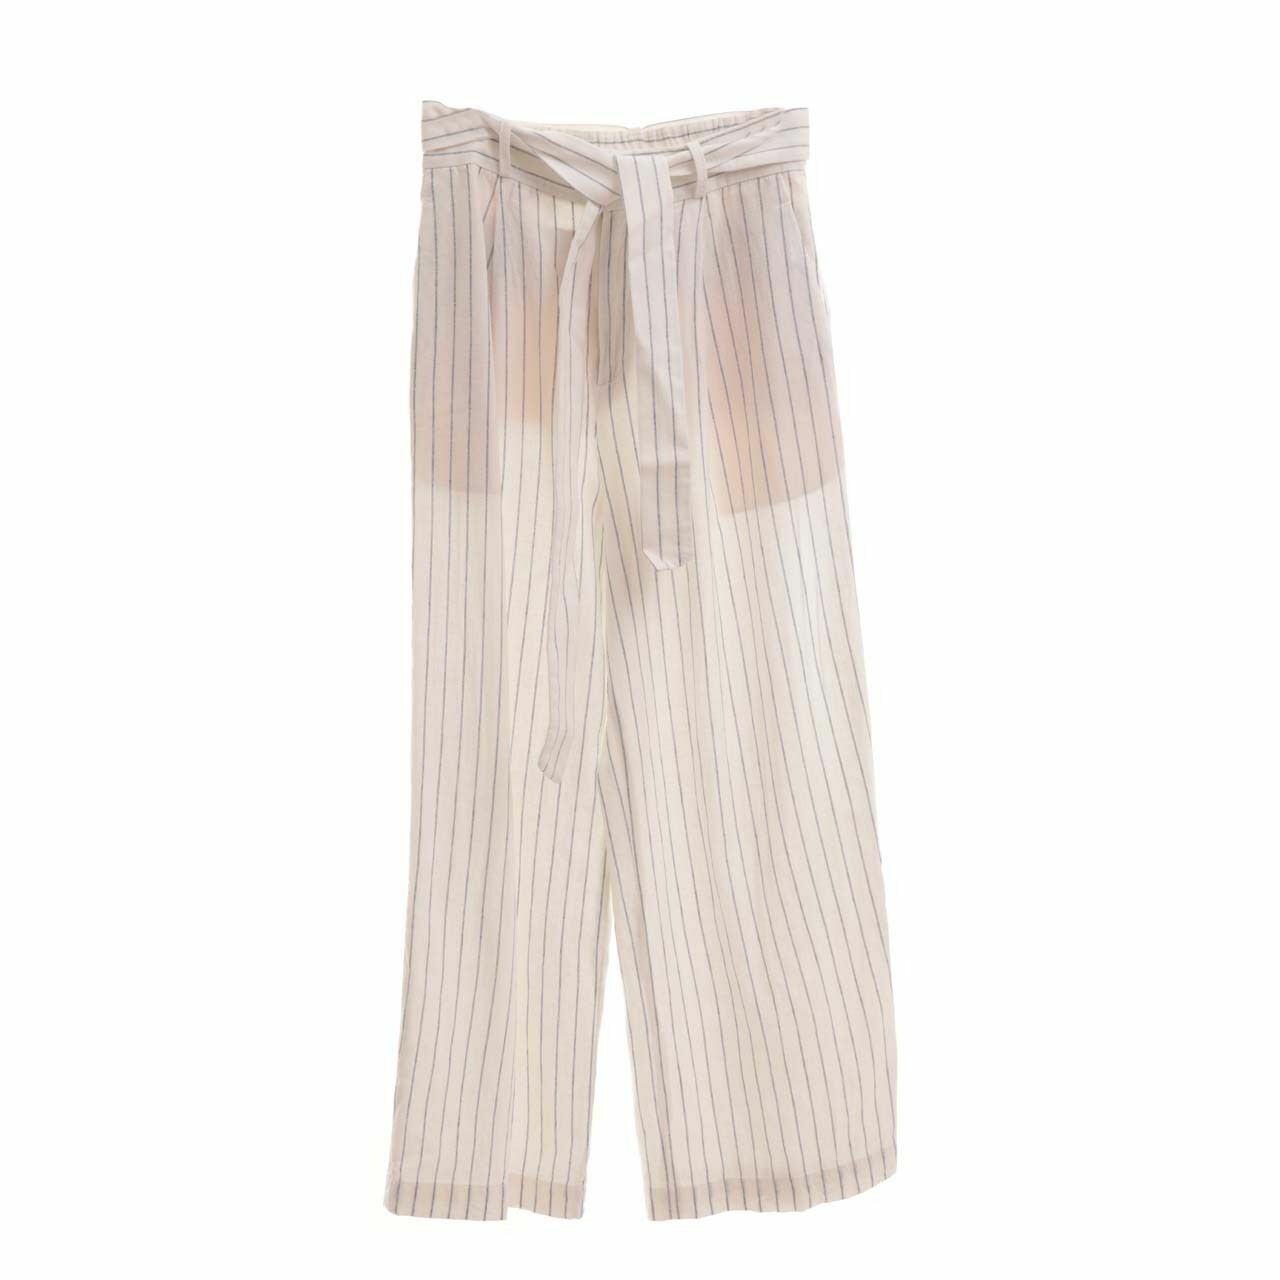 UNIQLO White Stripes Cullotes Long Pants